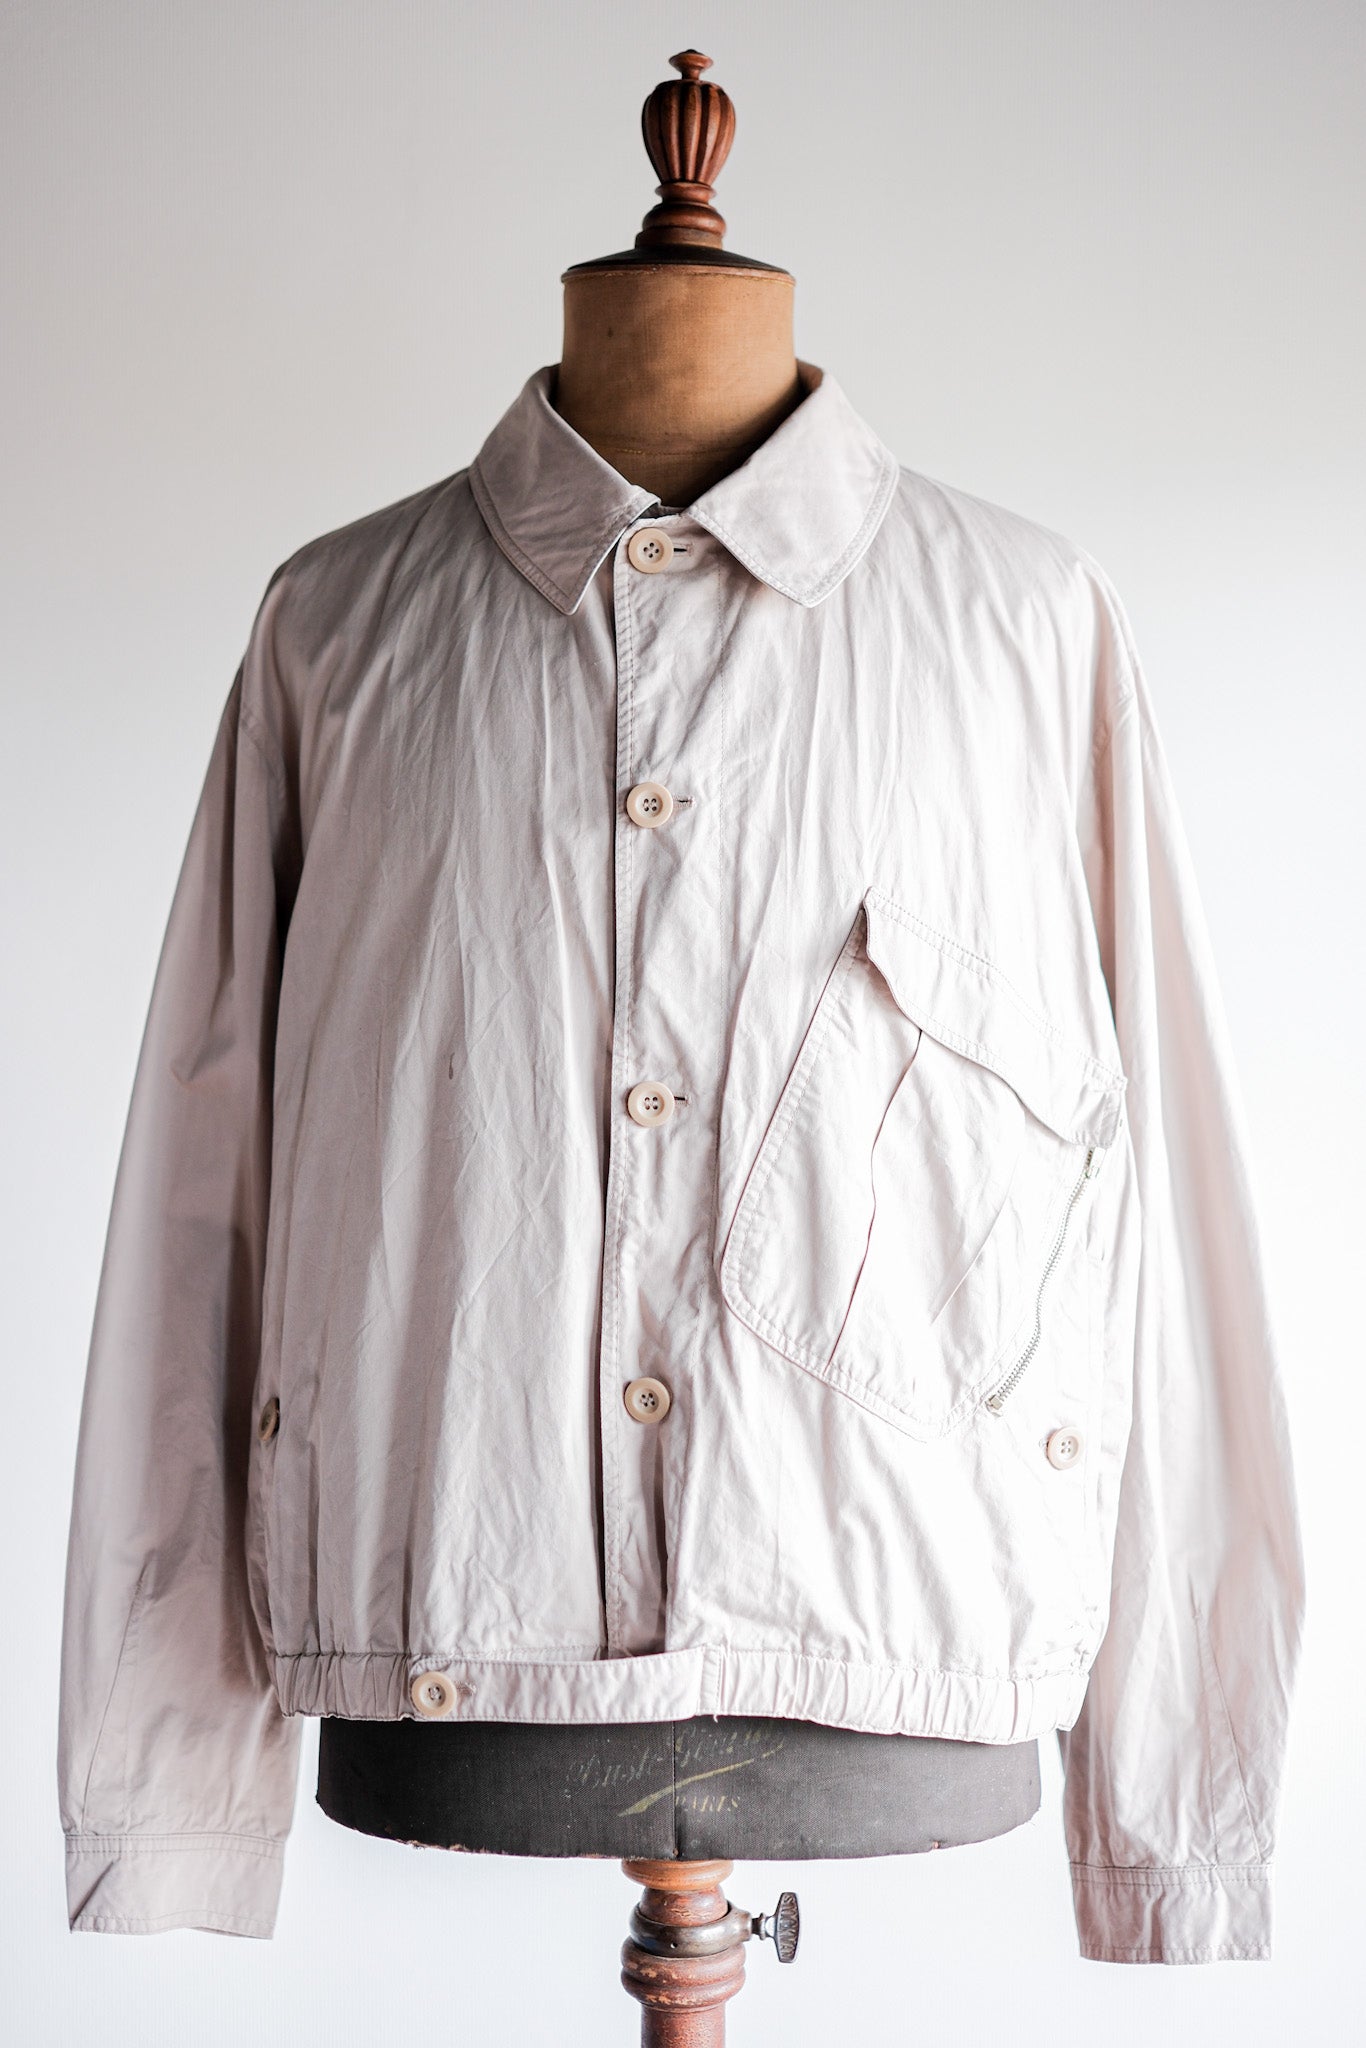 [~80 年代] 舊 GIORGIO ARMANI 棉質夾克衫